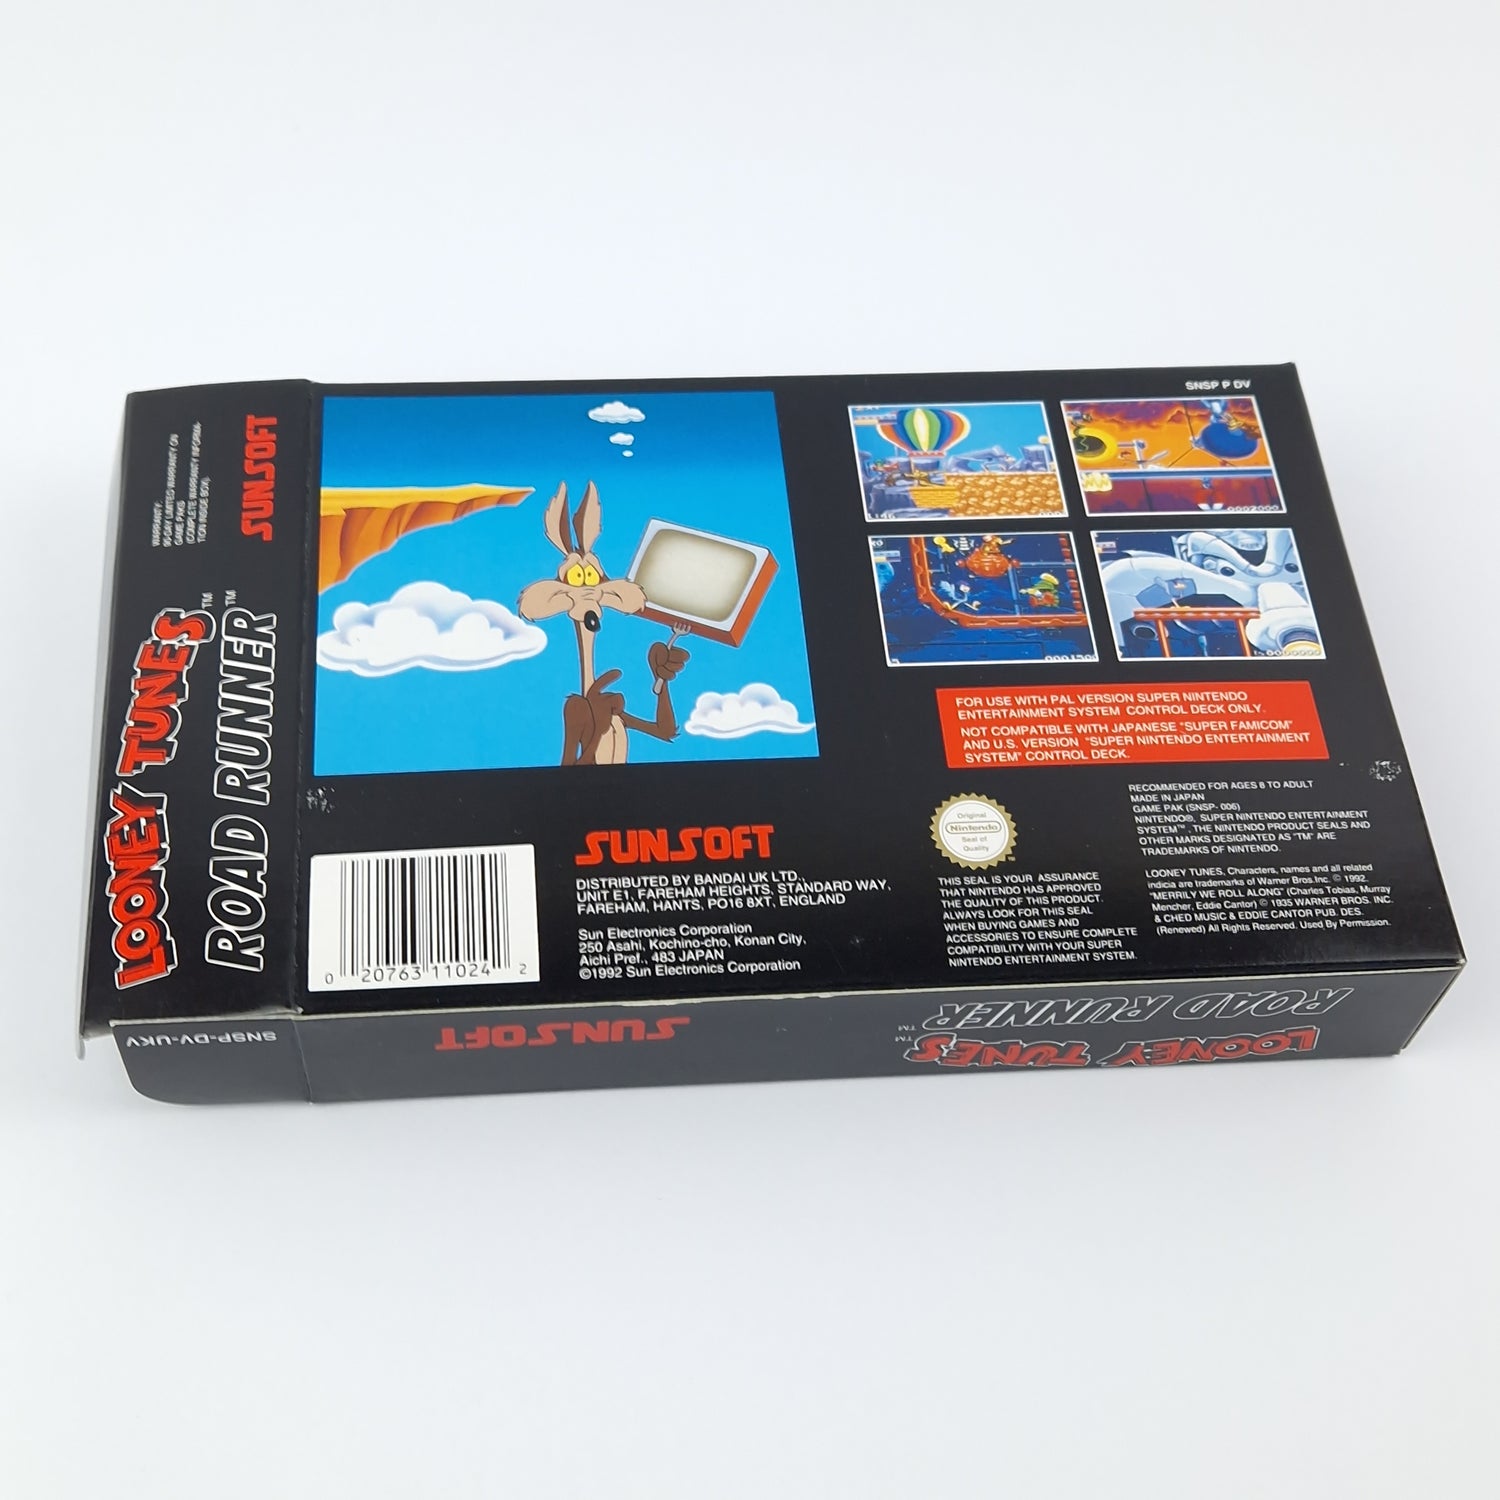 Super Nintendo Game: Looney Tunes Road Runner - SNES Module Instructions OVP cib